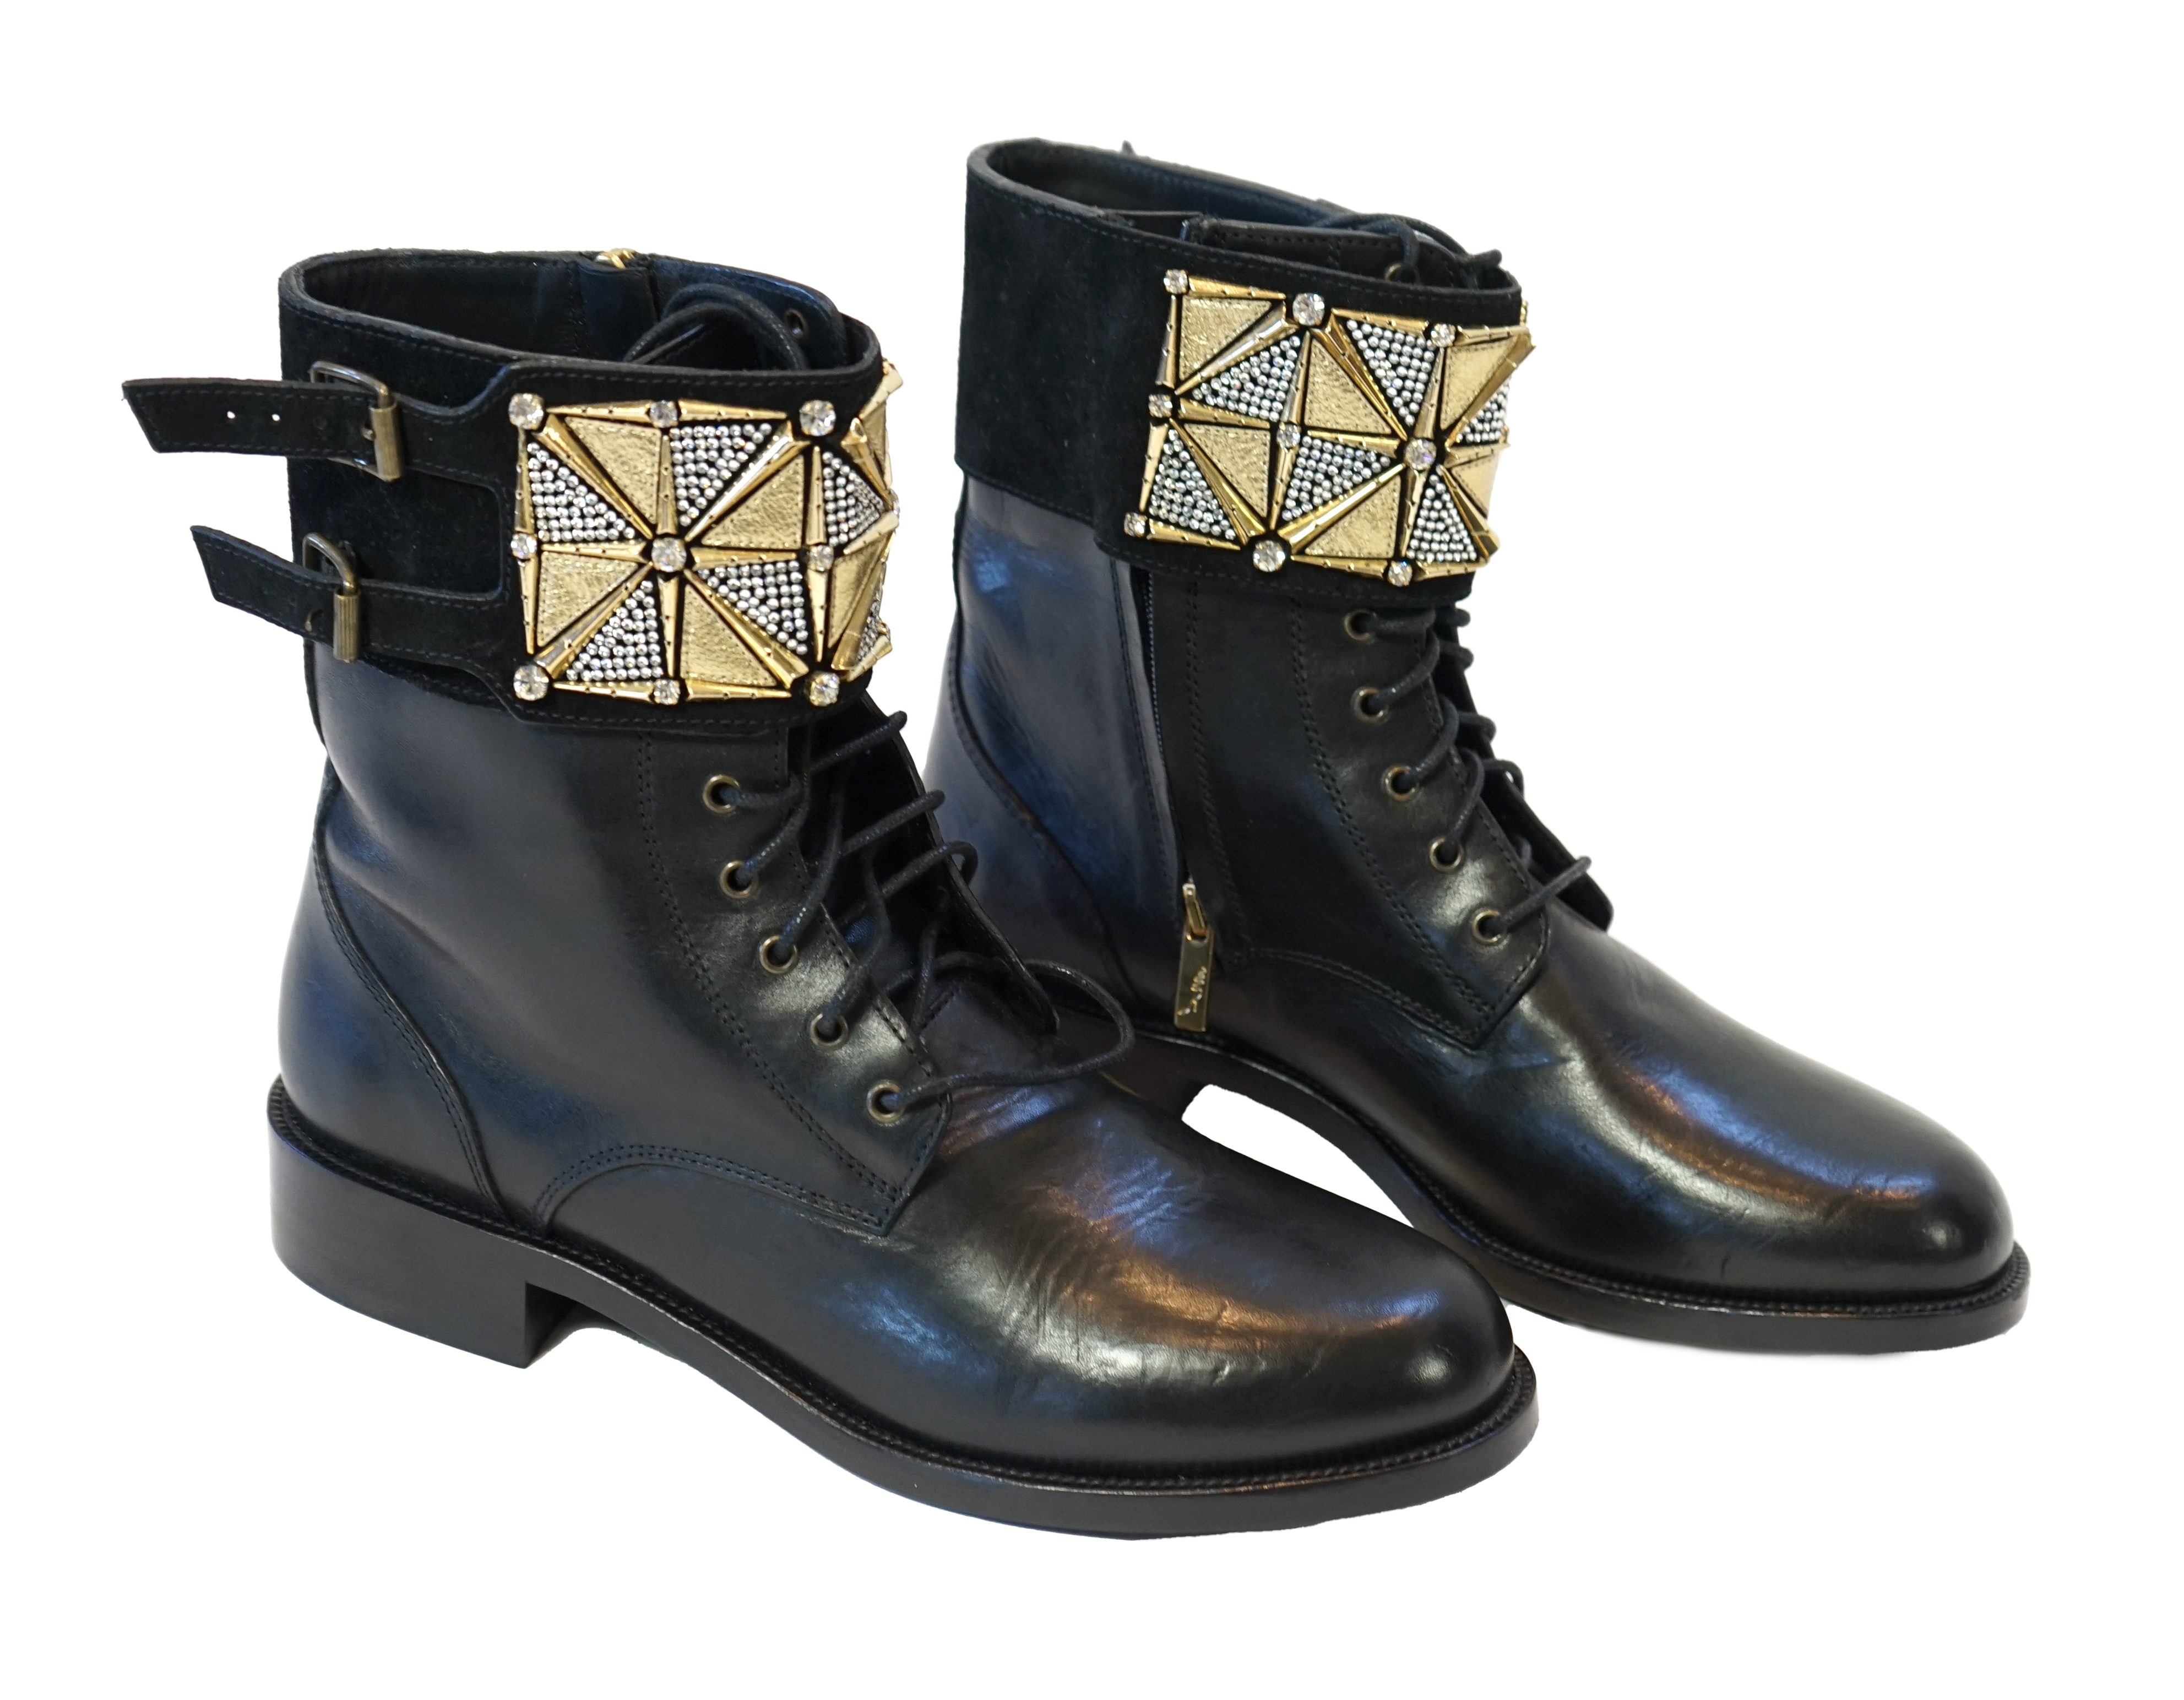 A pair of René Caovilla embellished unworn black leather biker boots, size EU 40